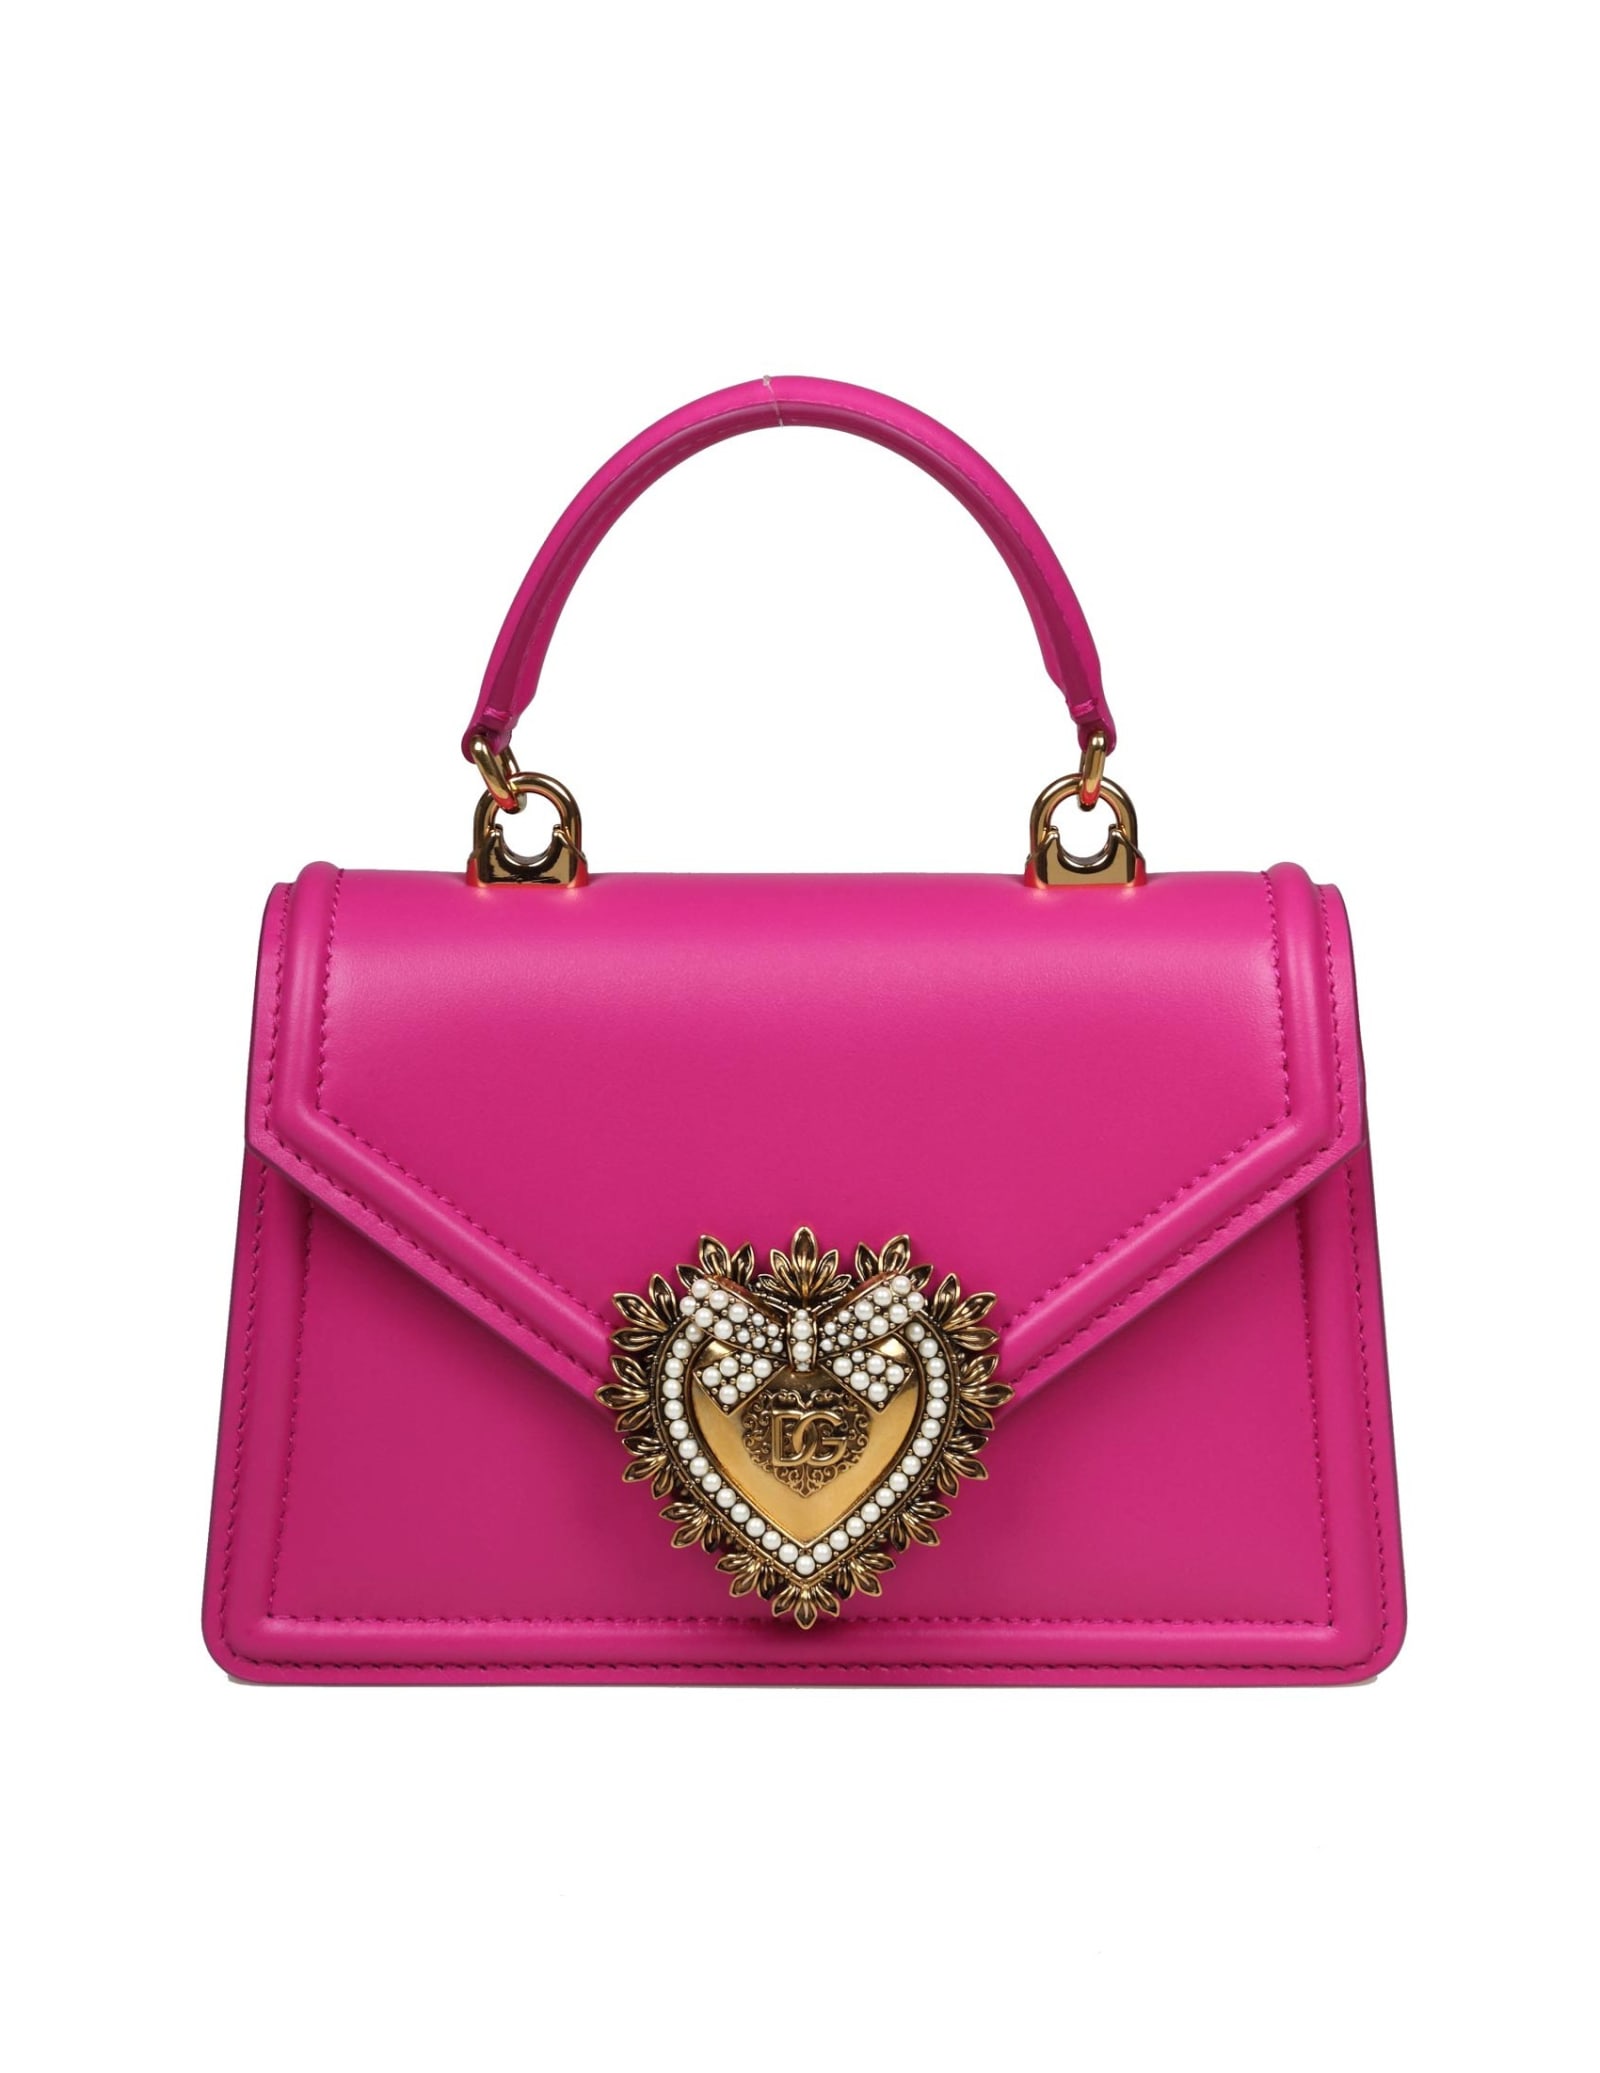 Dolce & Gabbana Small Devotion Handbag In Shocking Pink Leather